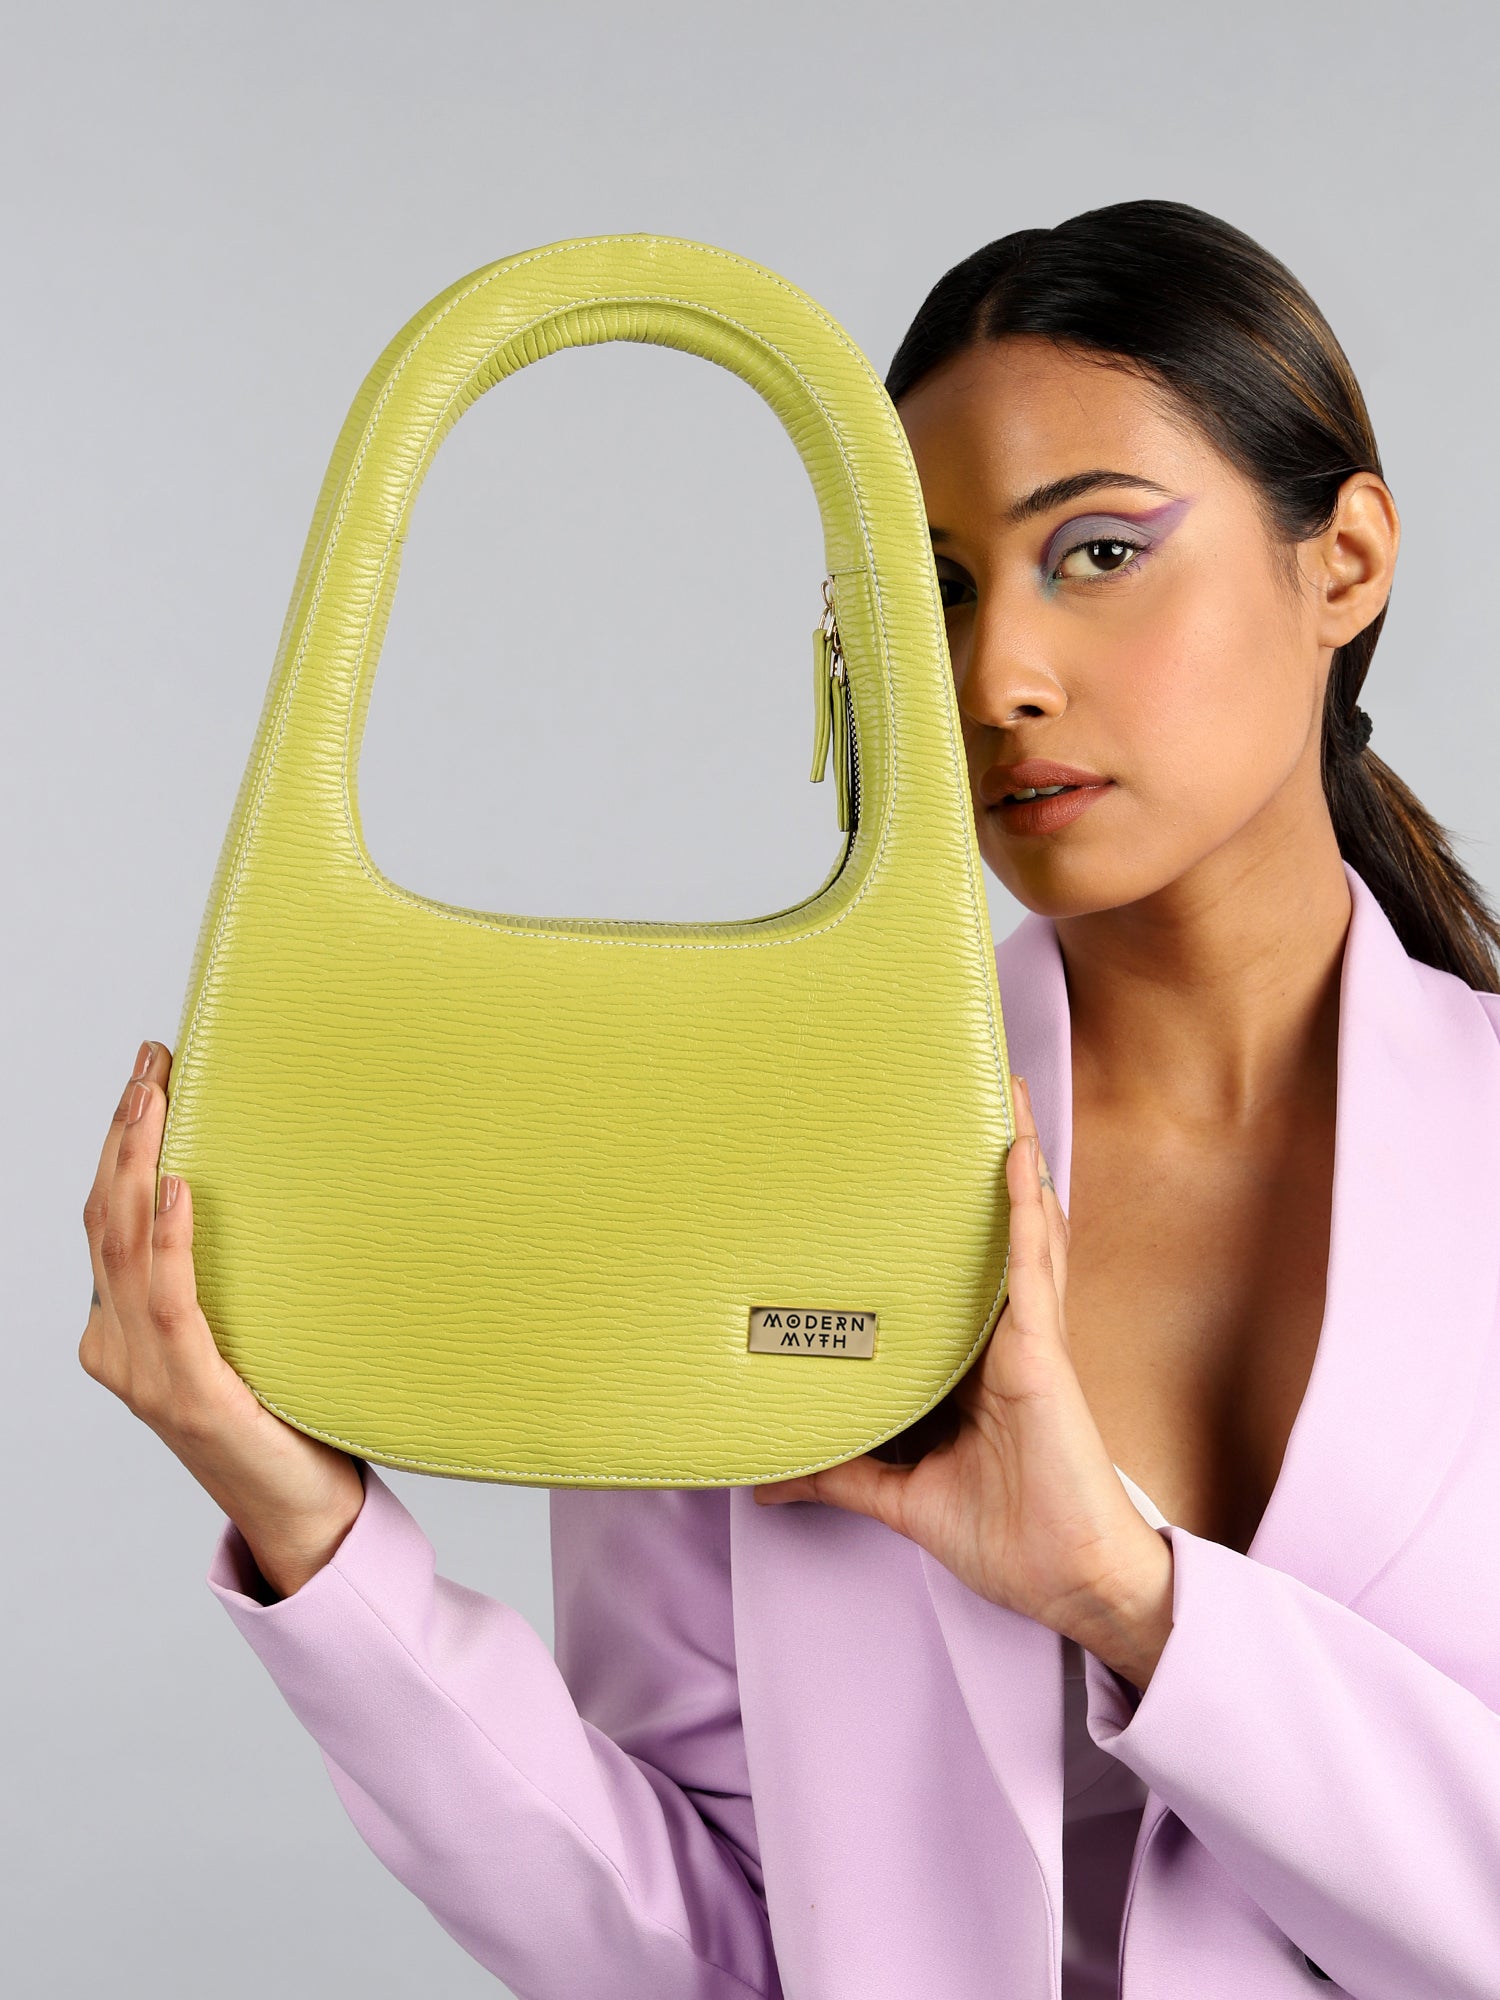 Buy Designer Bags Online in India